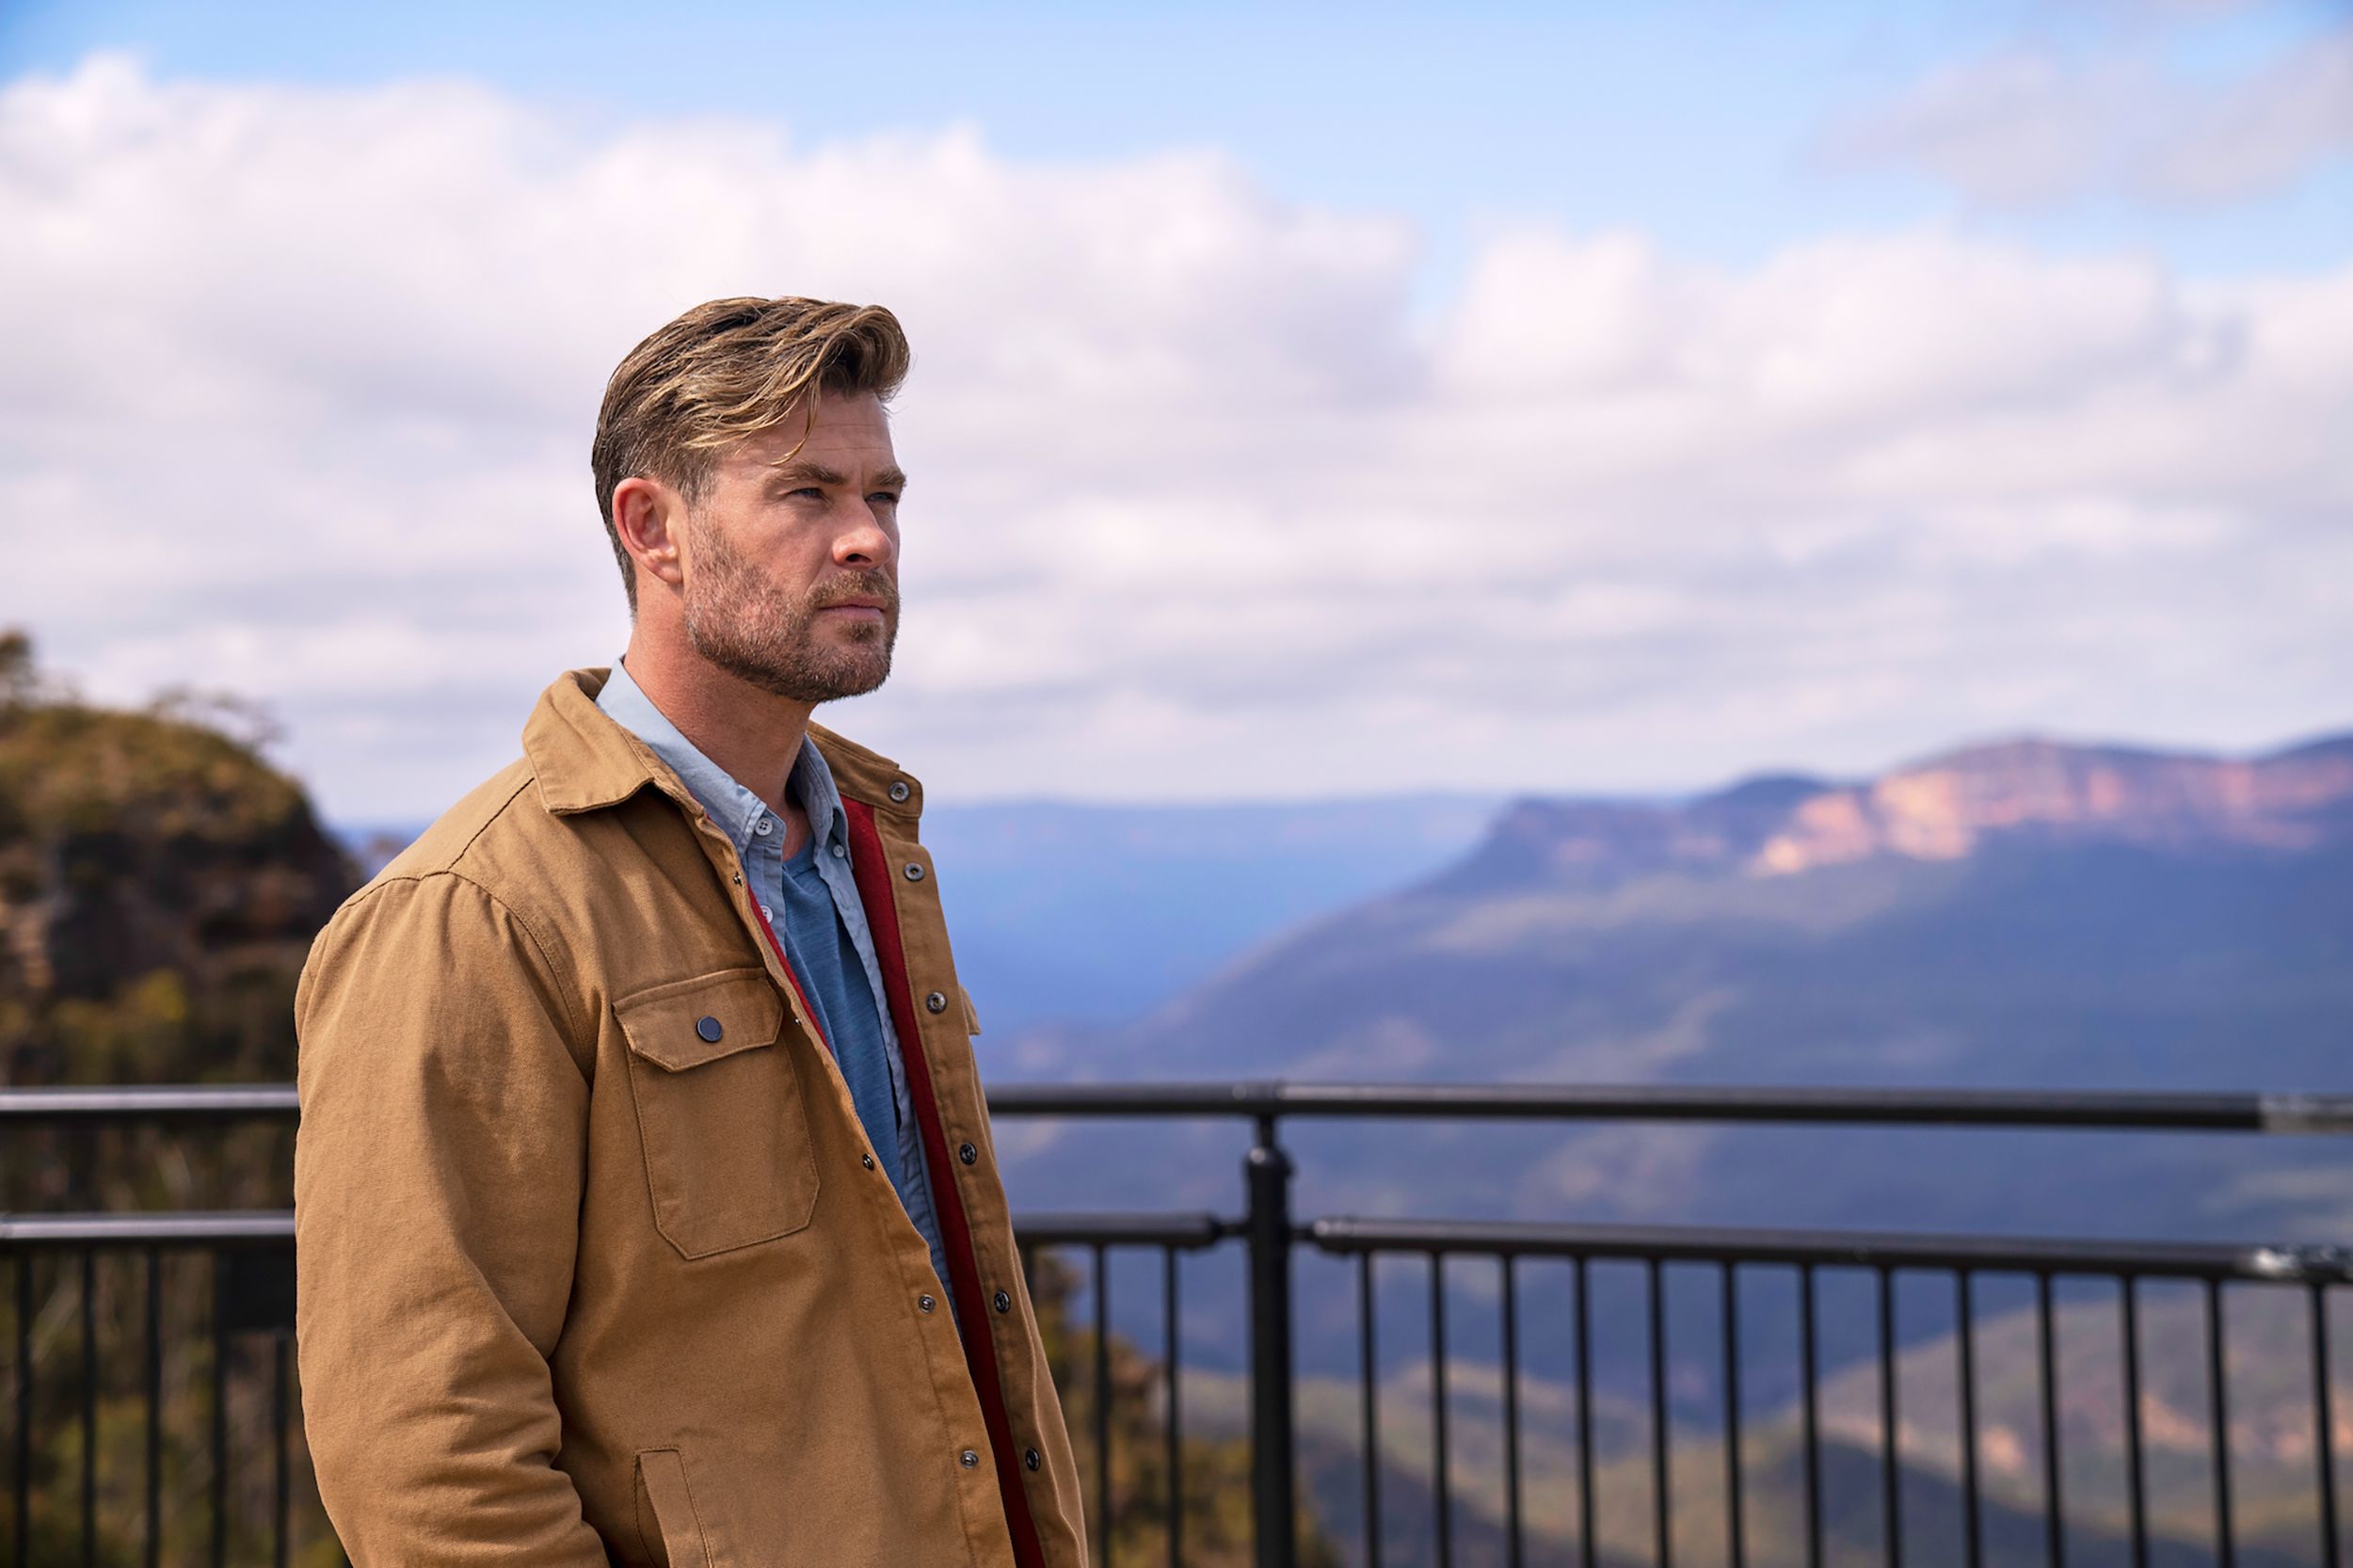 Chris Hemsworth Announces Break From Acting Due to Alzheimer's  Predisposition